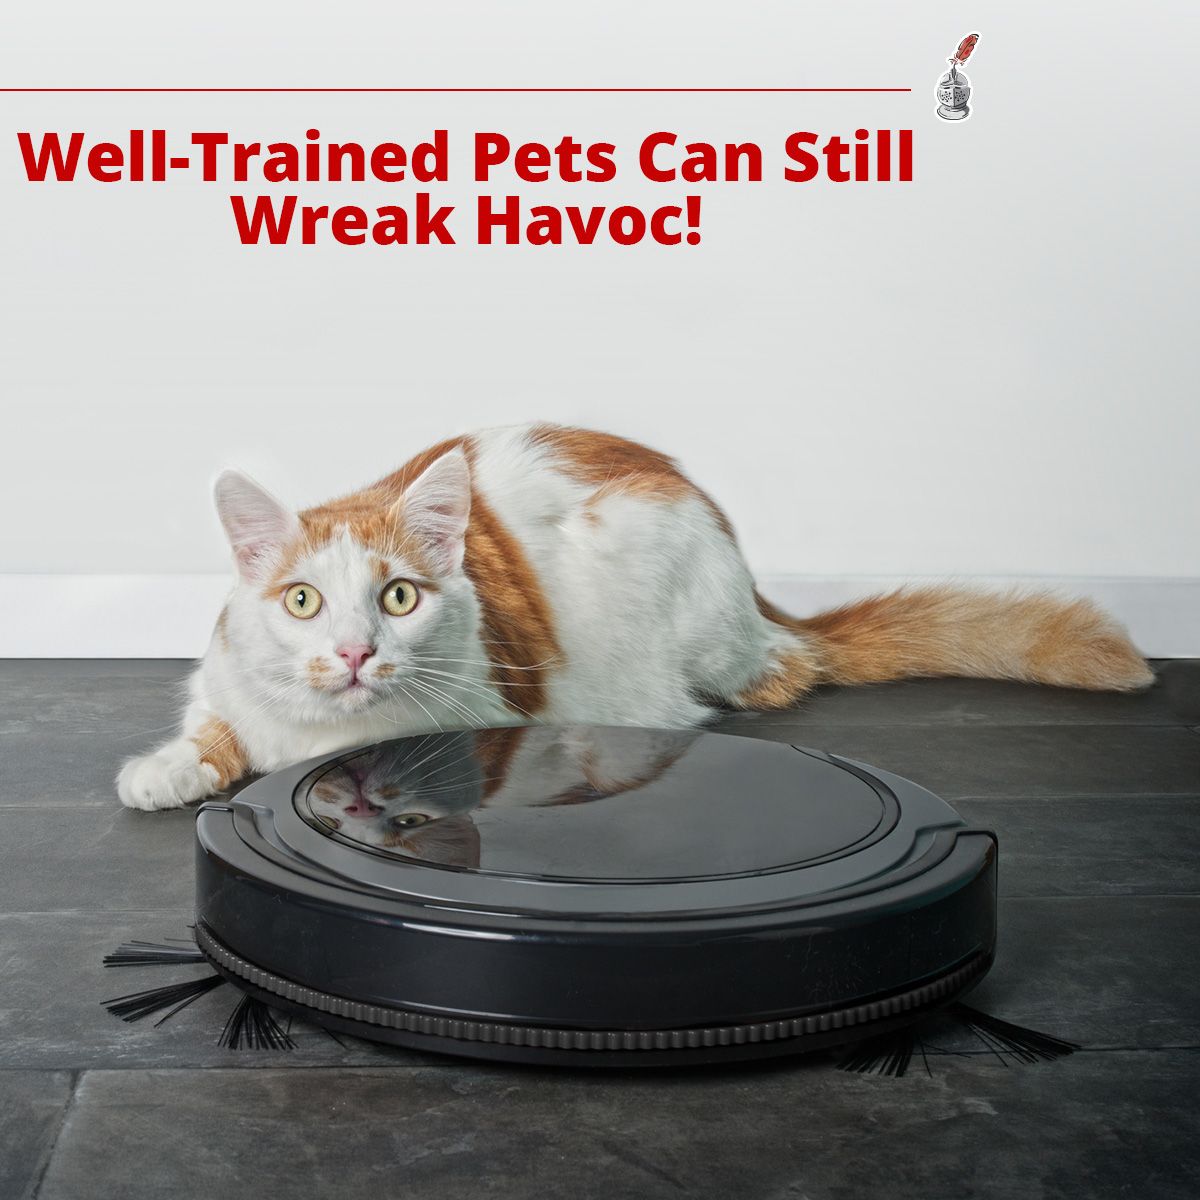 Well-Trained Pets Can Still Wreak Havoc!